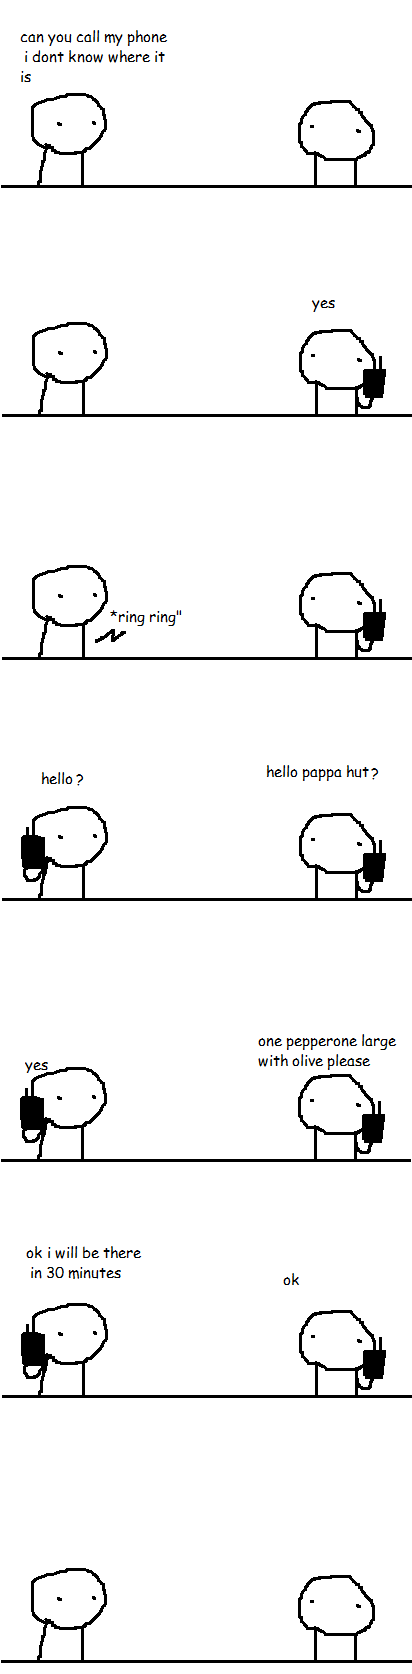 telephone conversation